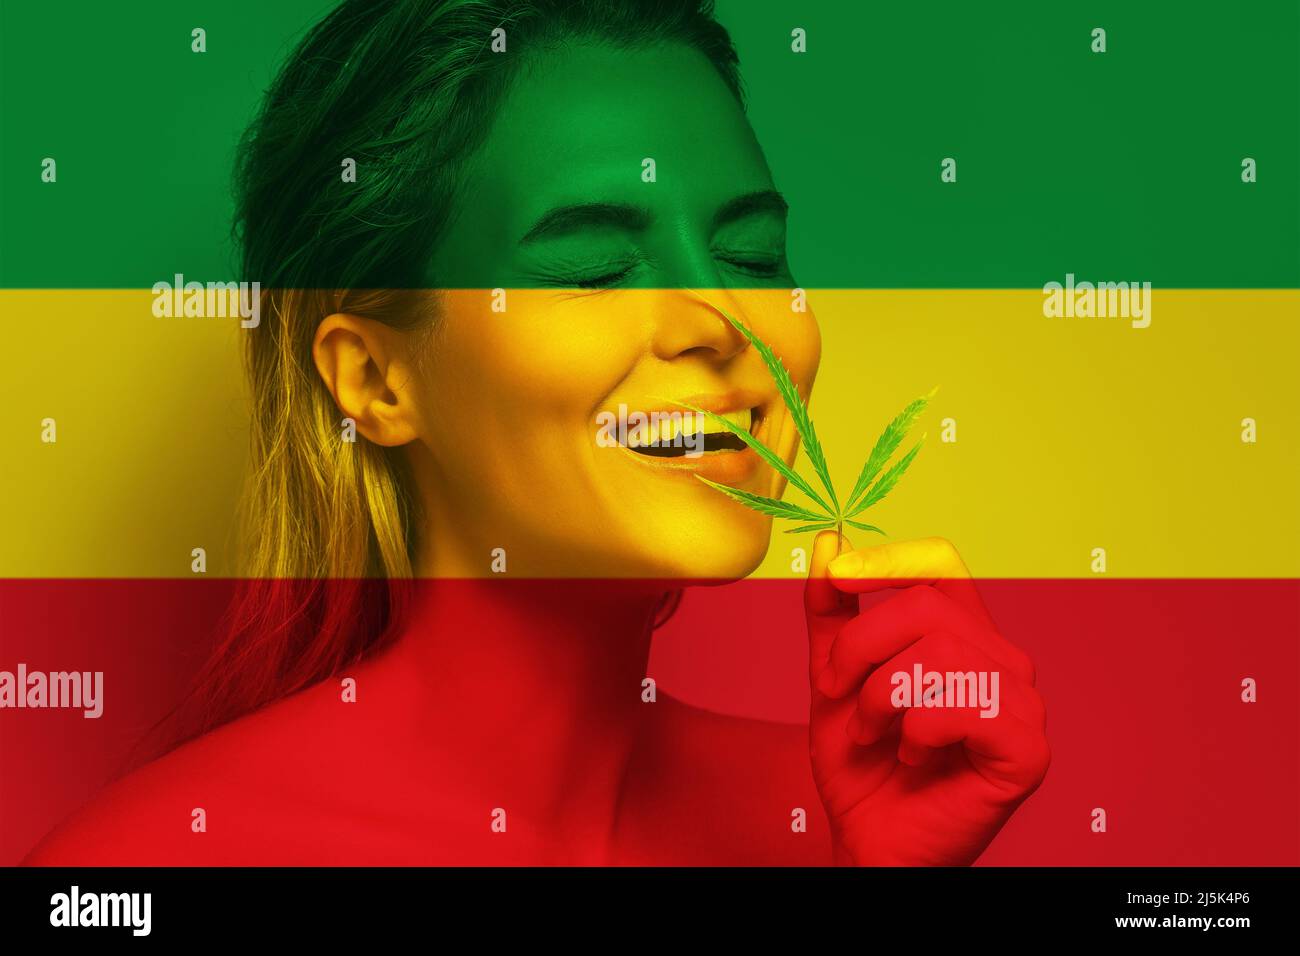 Rastafari farben -Fotos und -Bildmaterial in hoher Auflösung – Alamy